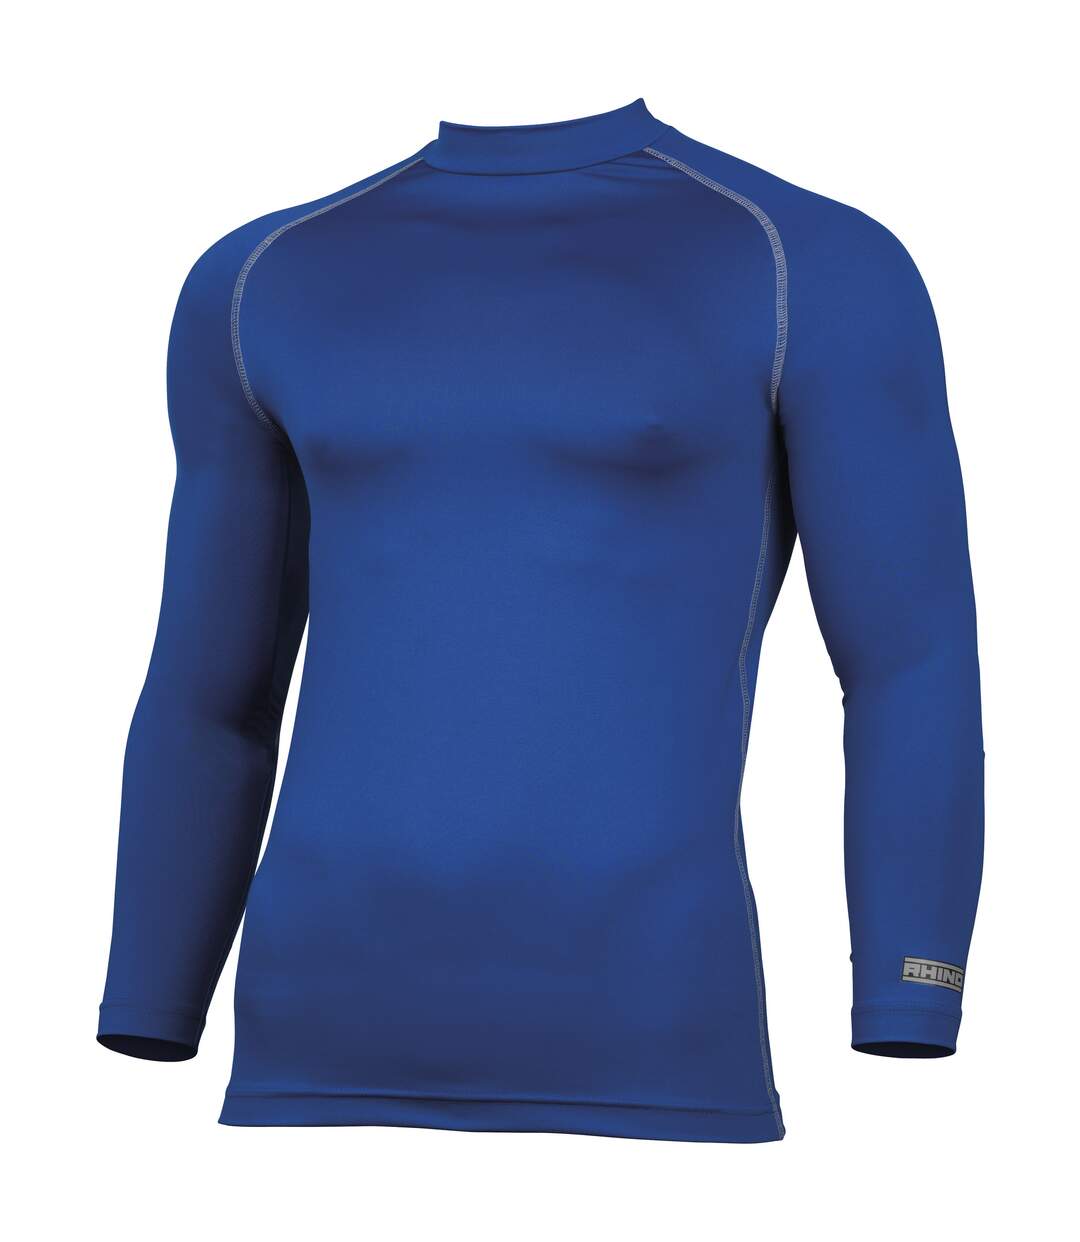 Rhino - T-shirt base layer à manches longues - Homme (Bleu roi) - UTRW1276